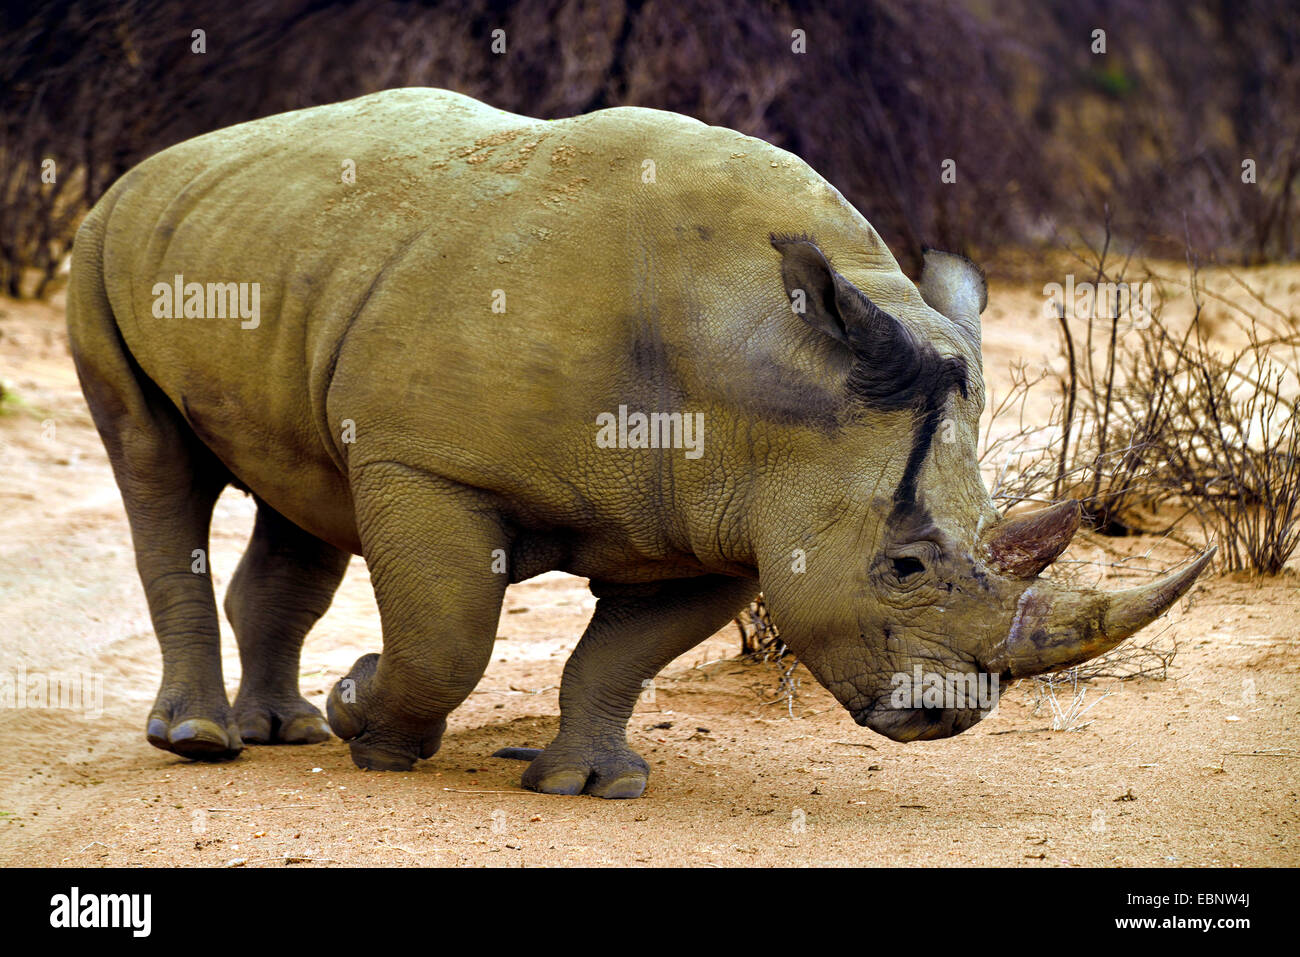 white rhinoceros, square-lipped rhinoceros, grass rhinoceros (Ceratotherium simum), going on sandy ground, Namibia Stock Photo